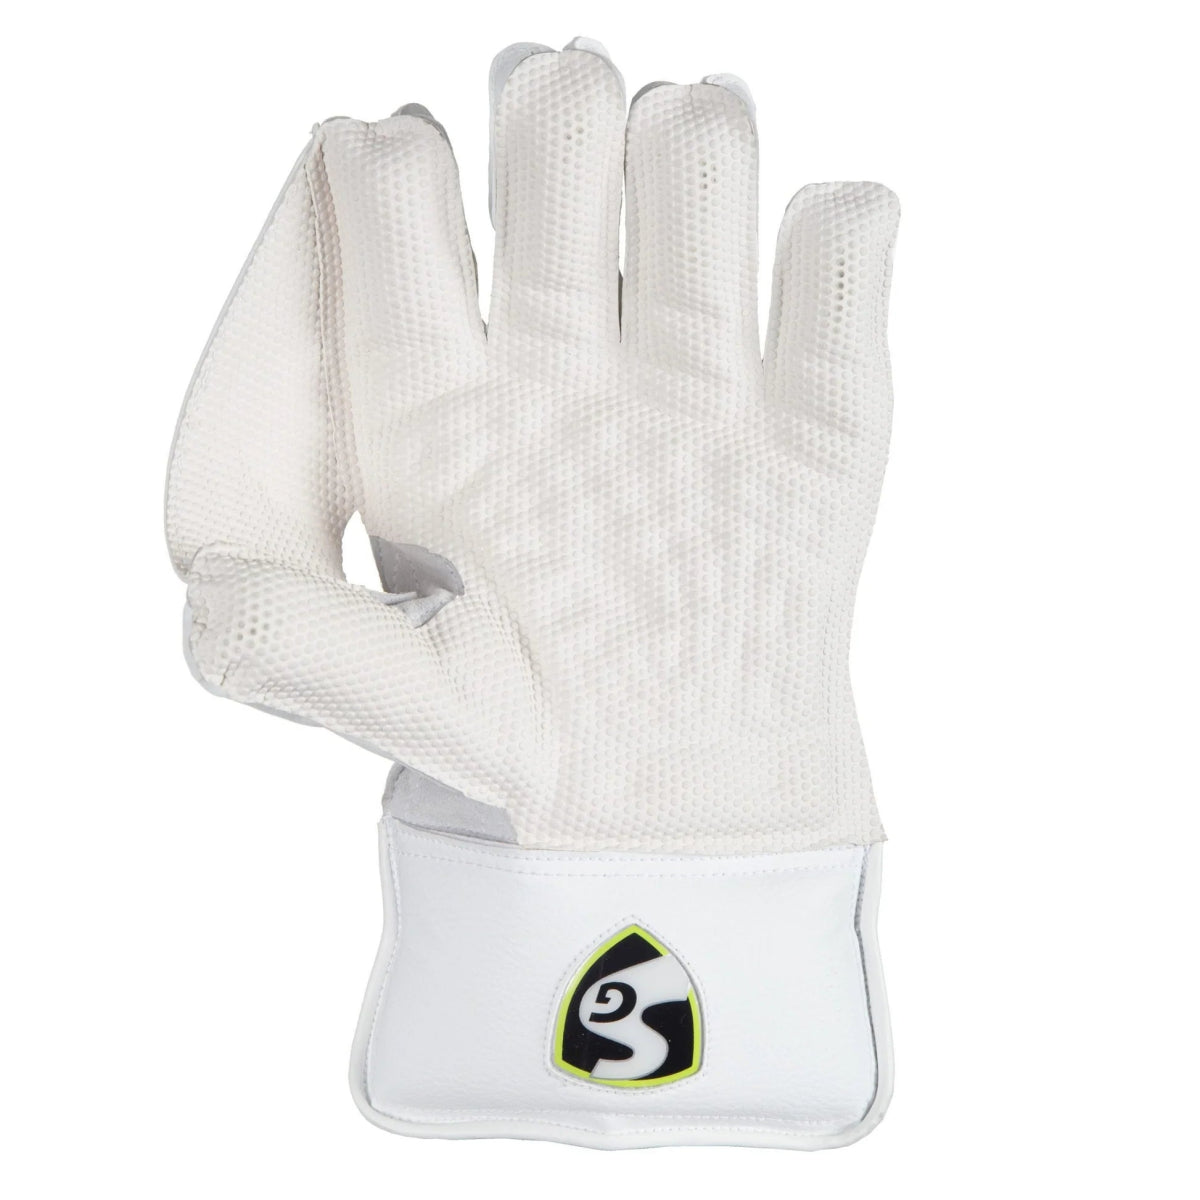 SG Club Cricket Wicket Keeping Gloves